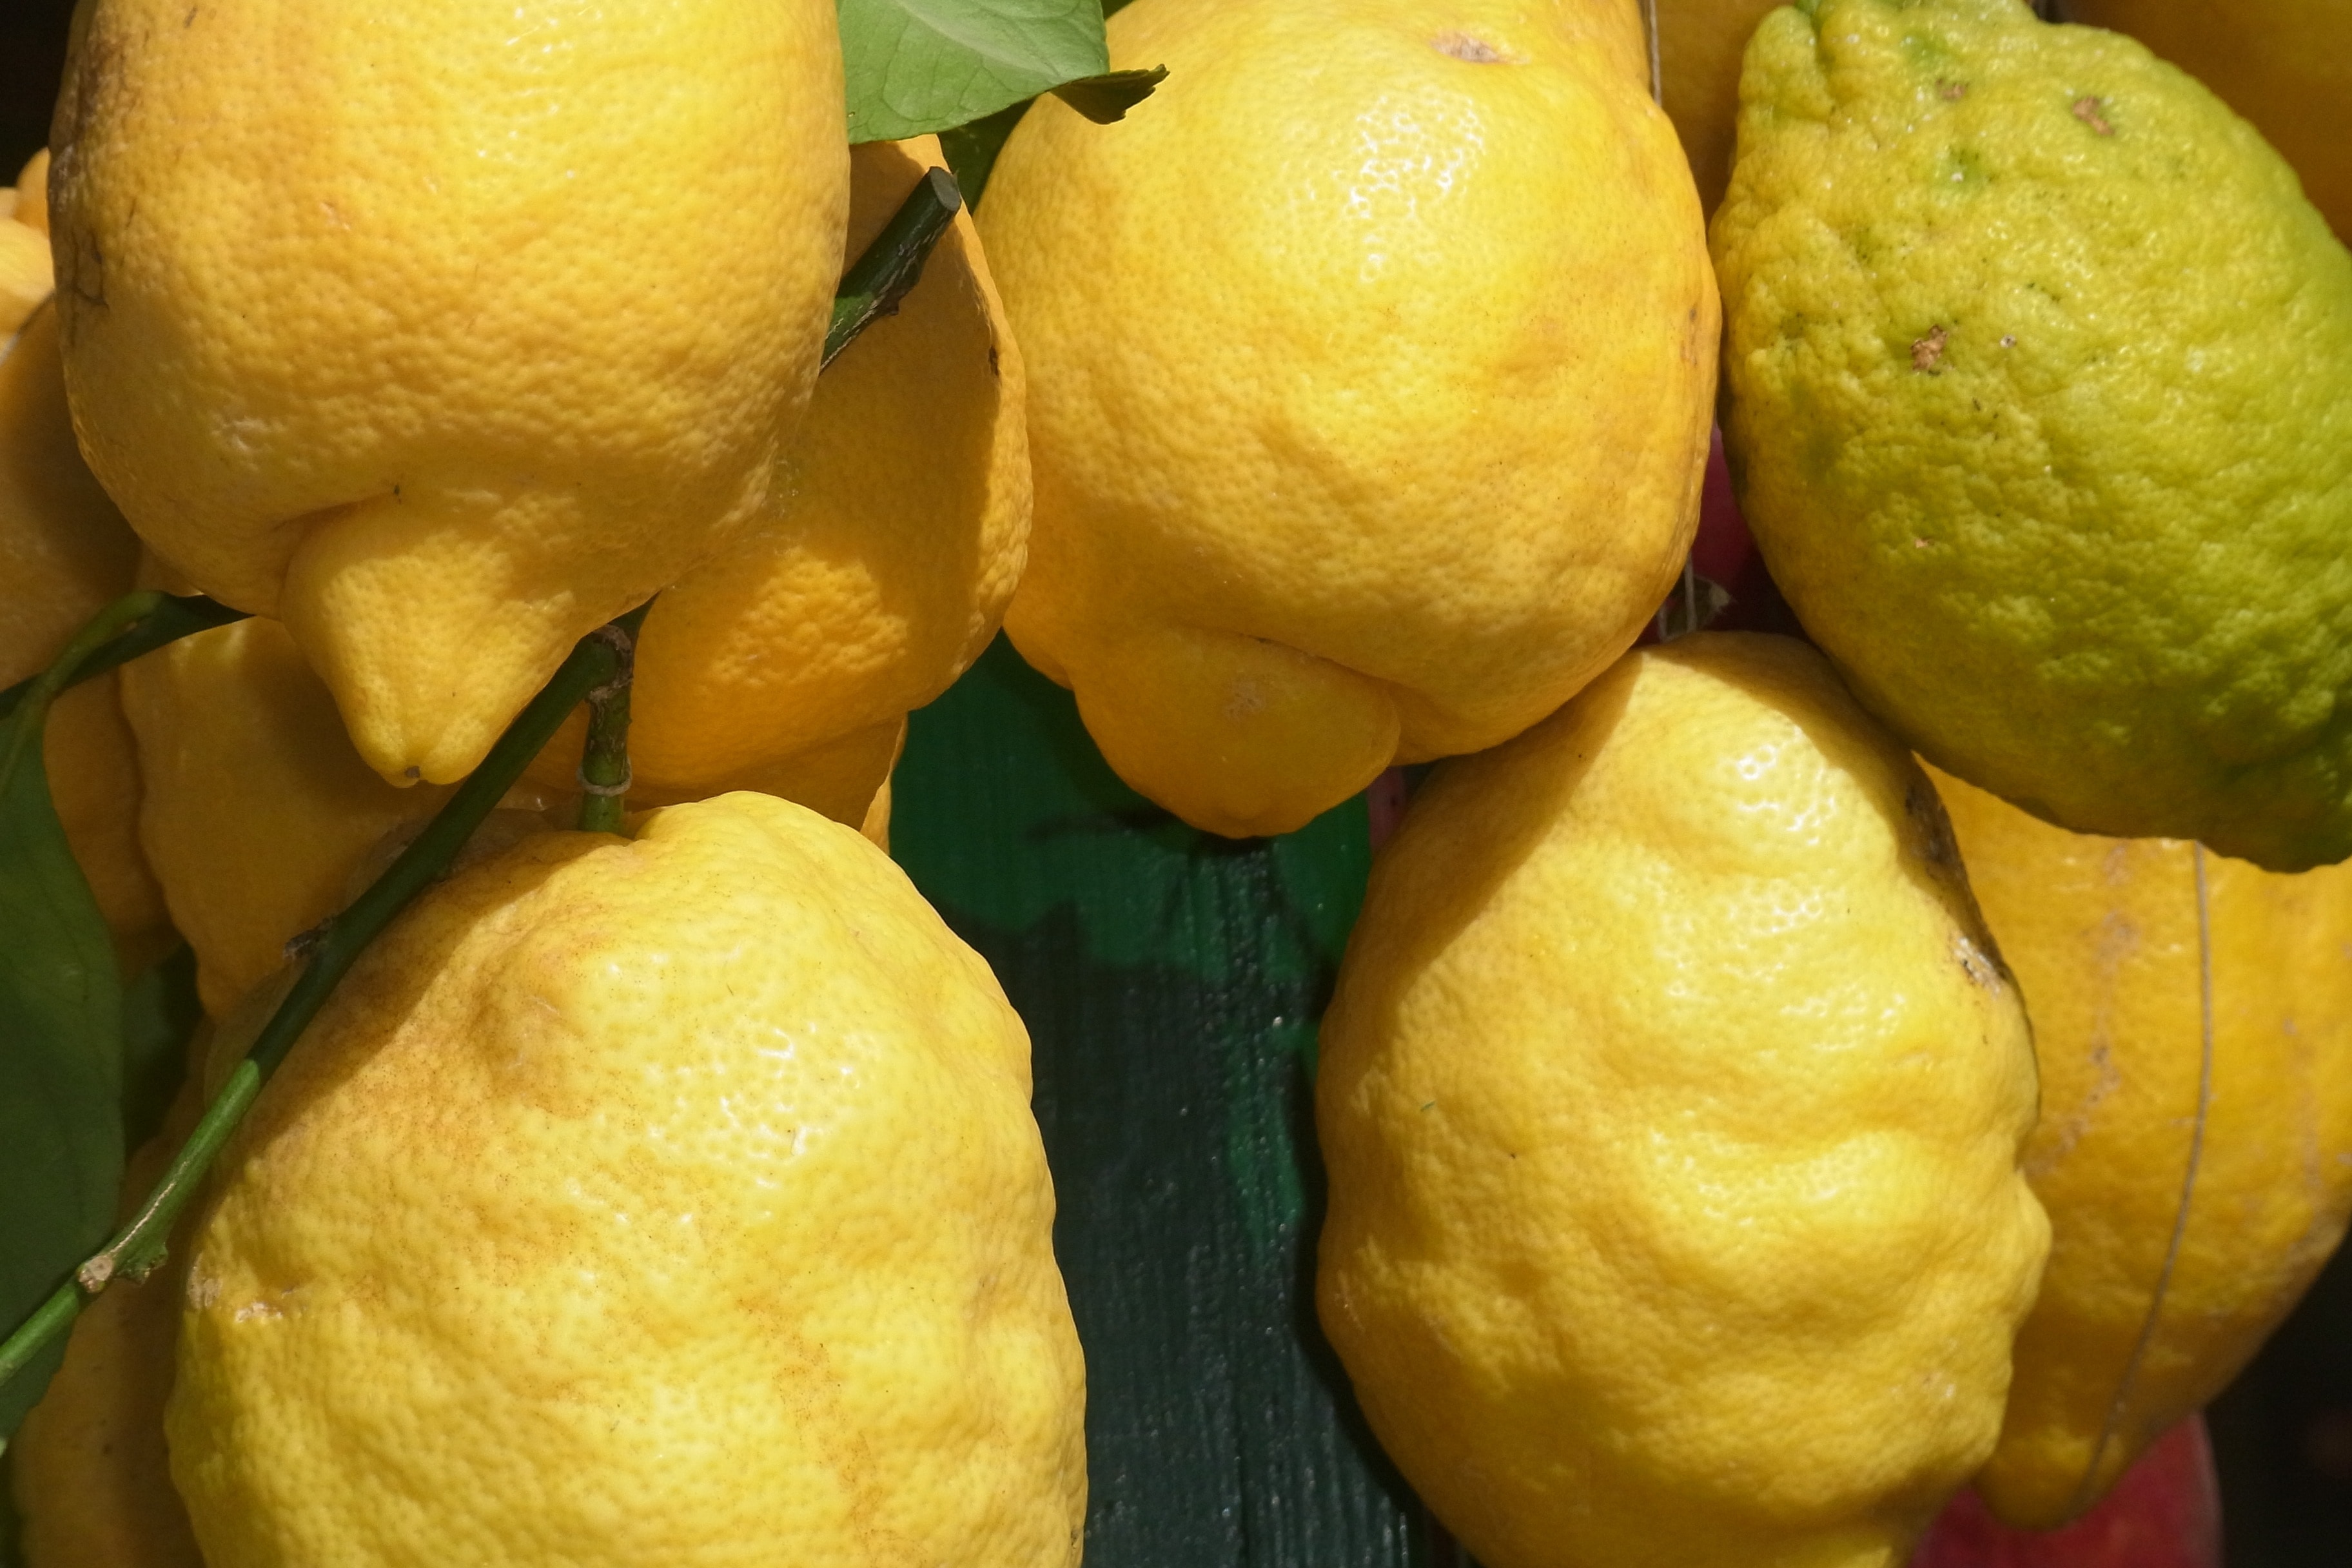 yellow lemon